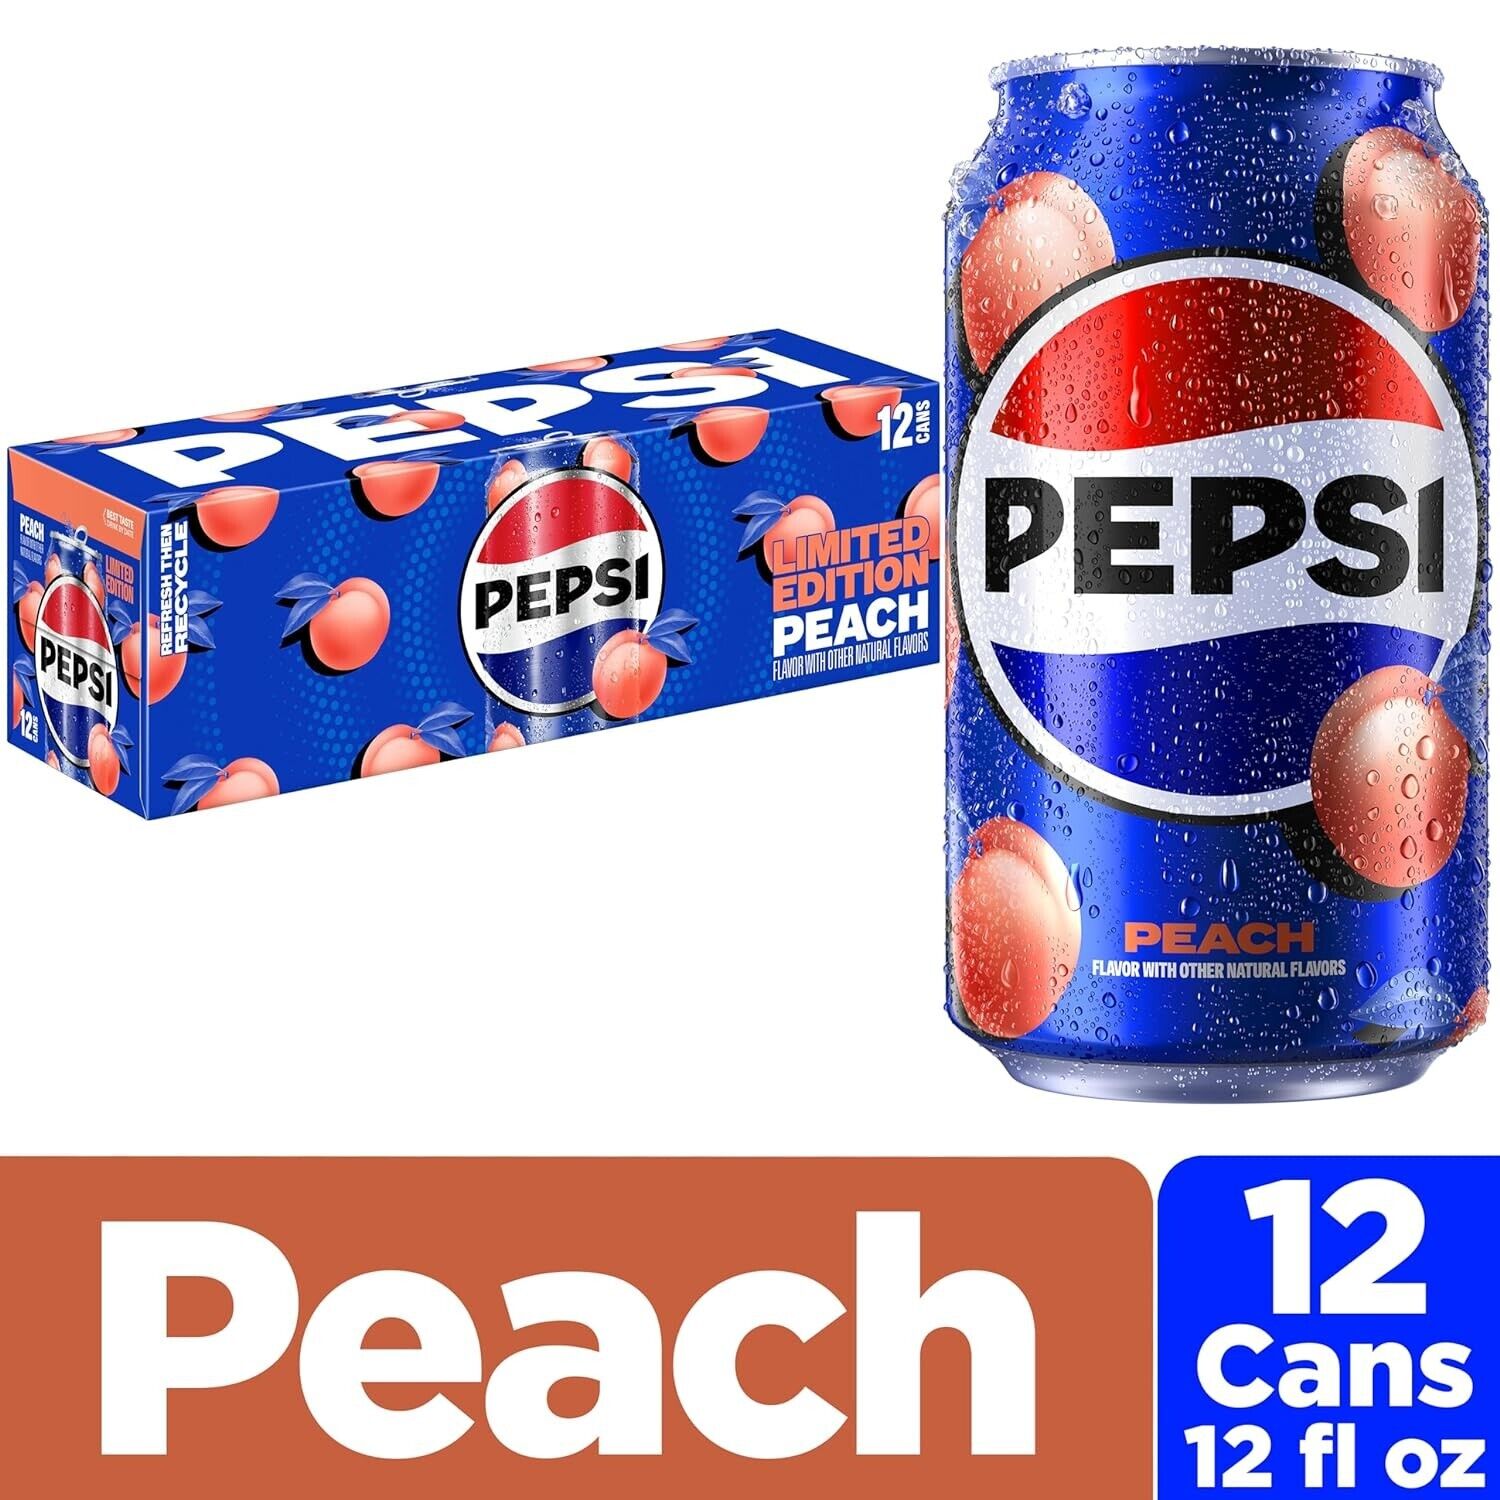 Pepsi Peach -Pepsi Cola Soda Pop Peach Limited Edition 12 fl oz 12 cans- PRESALE